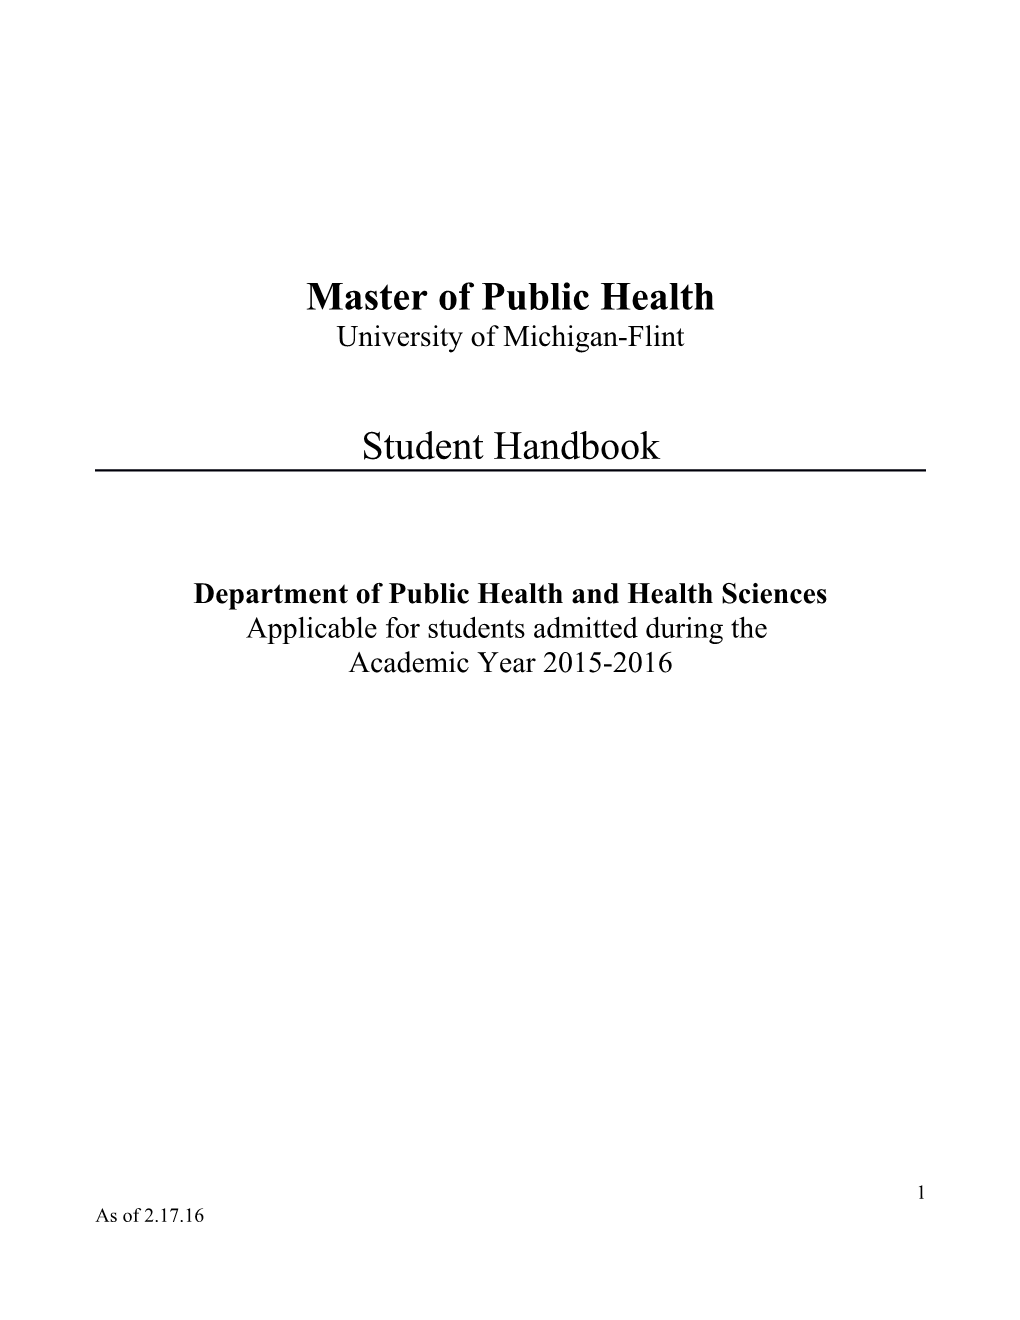 Mph Grauate Student Handbook: Revised 12/10/2015